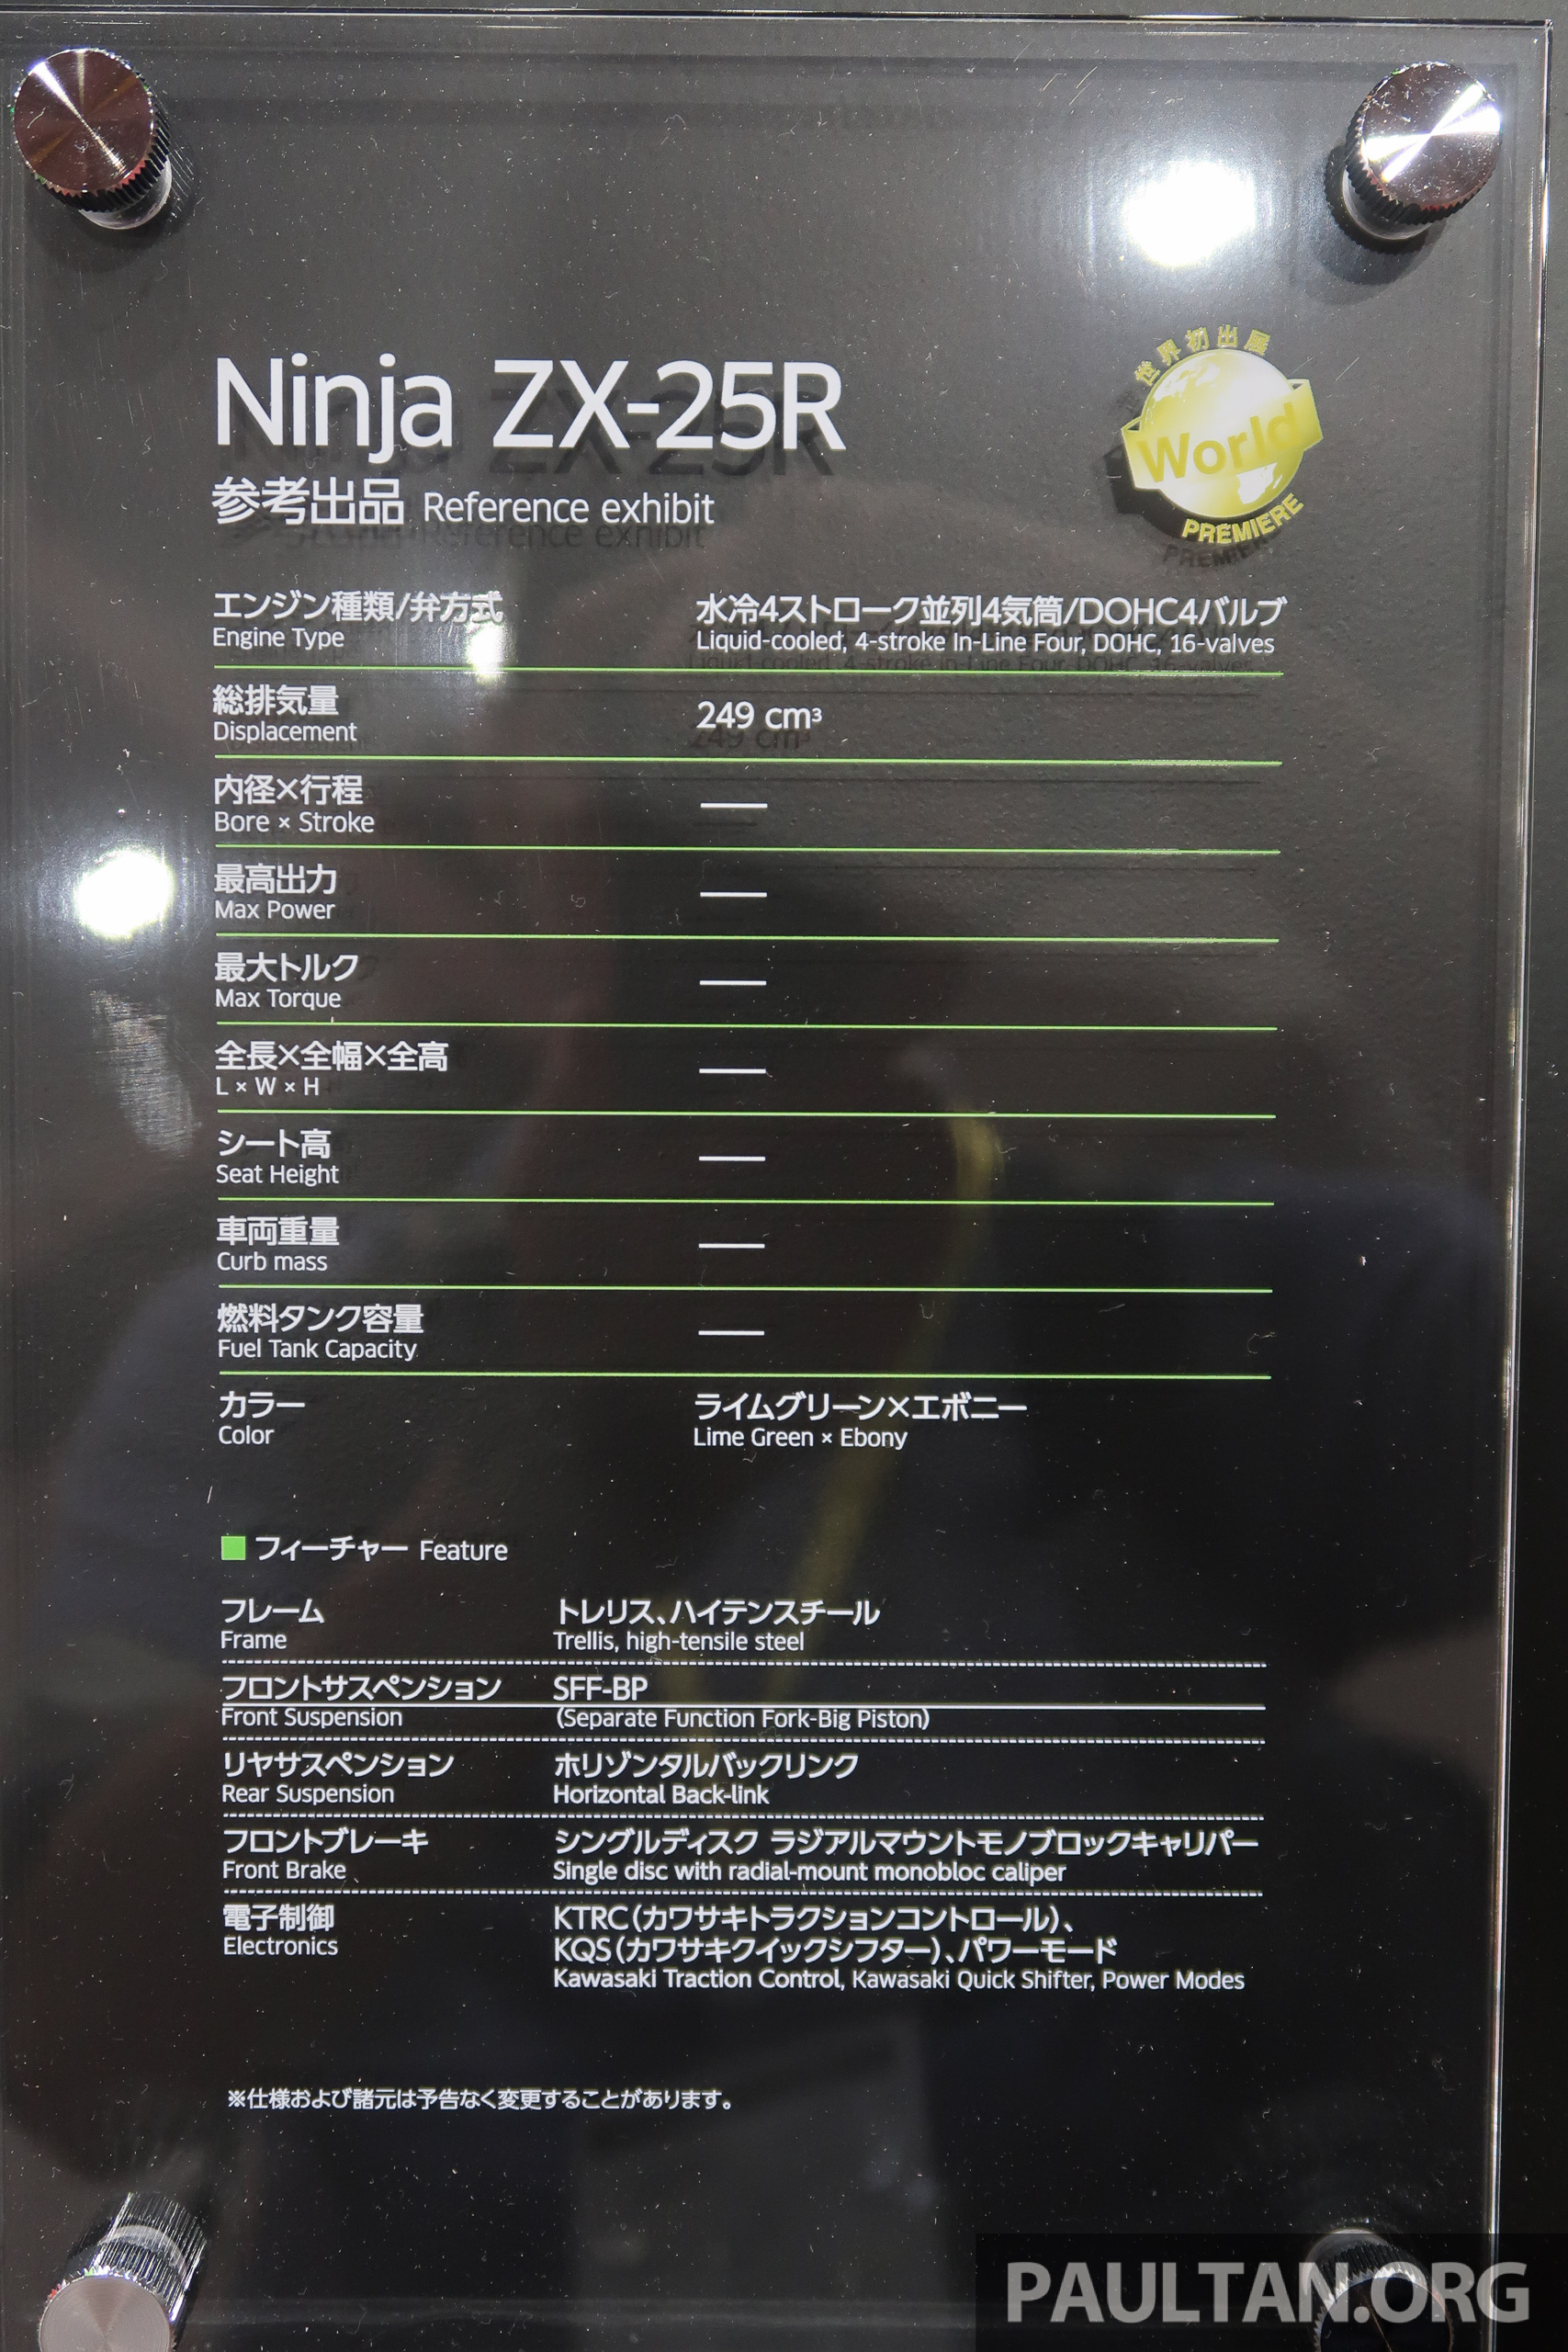 https://s1.paultan.org/image/2020/05/Kawasaki-Ninja-ZX-25R-Tokyo-Motor-Show-2019-ENG-23-1.jpg